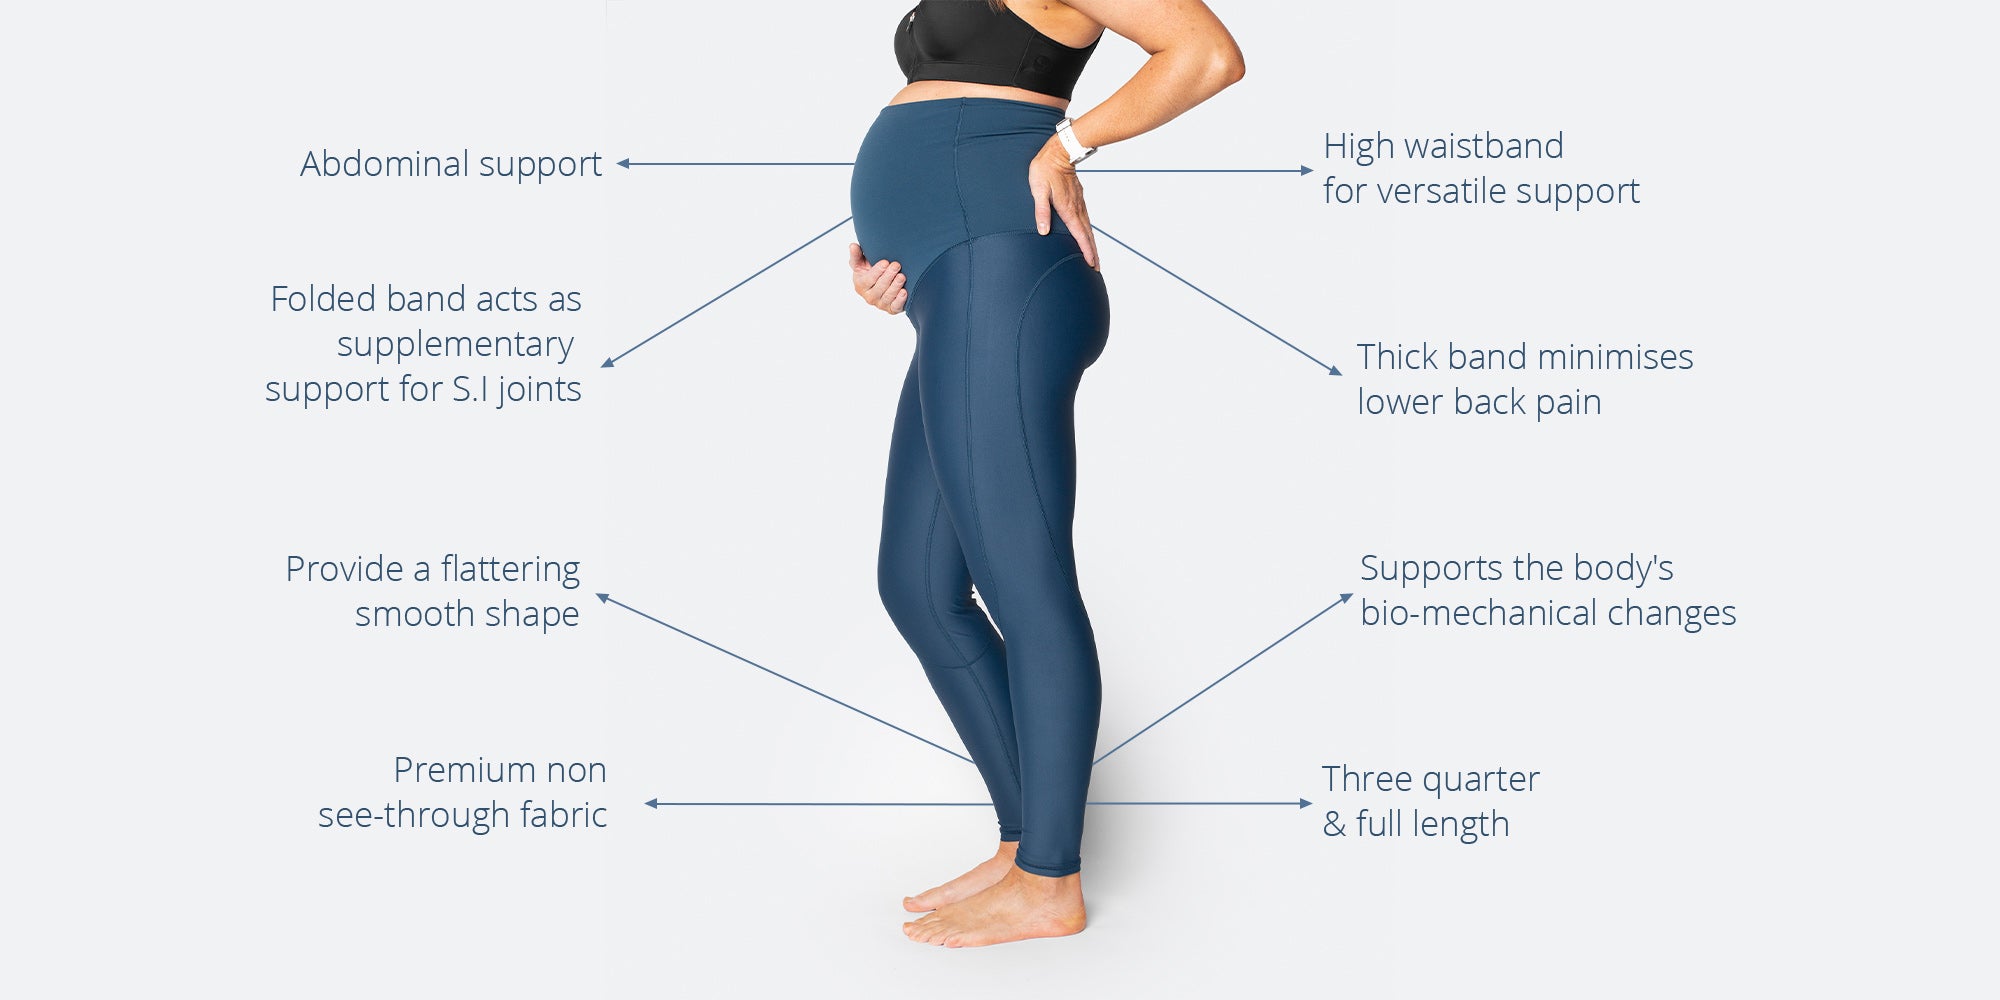 Postnatal Tummy Tight Control Built-In Shaping Full Length Legging